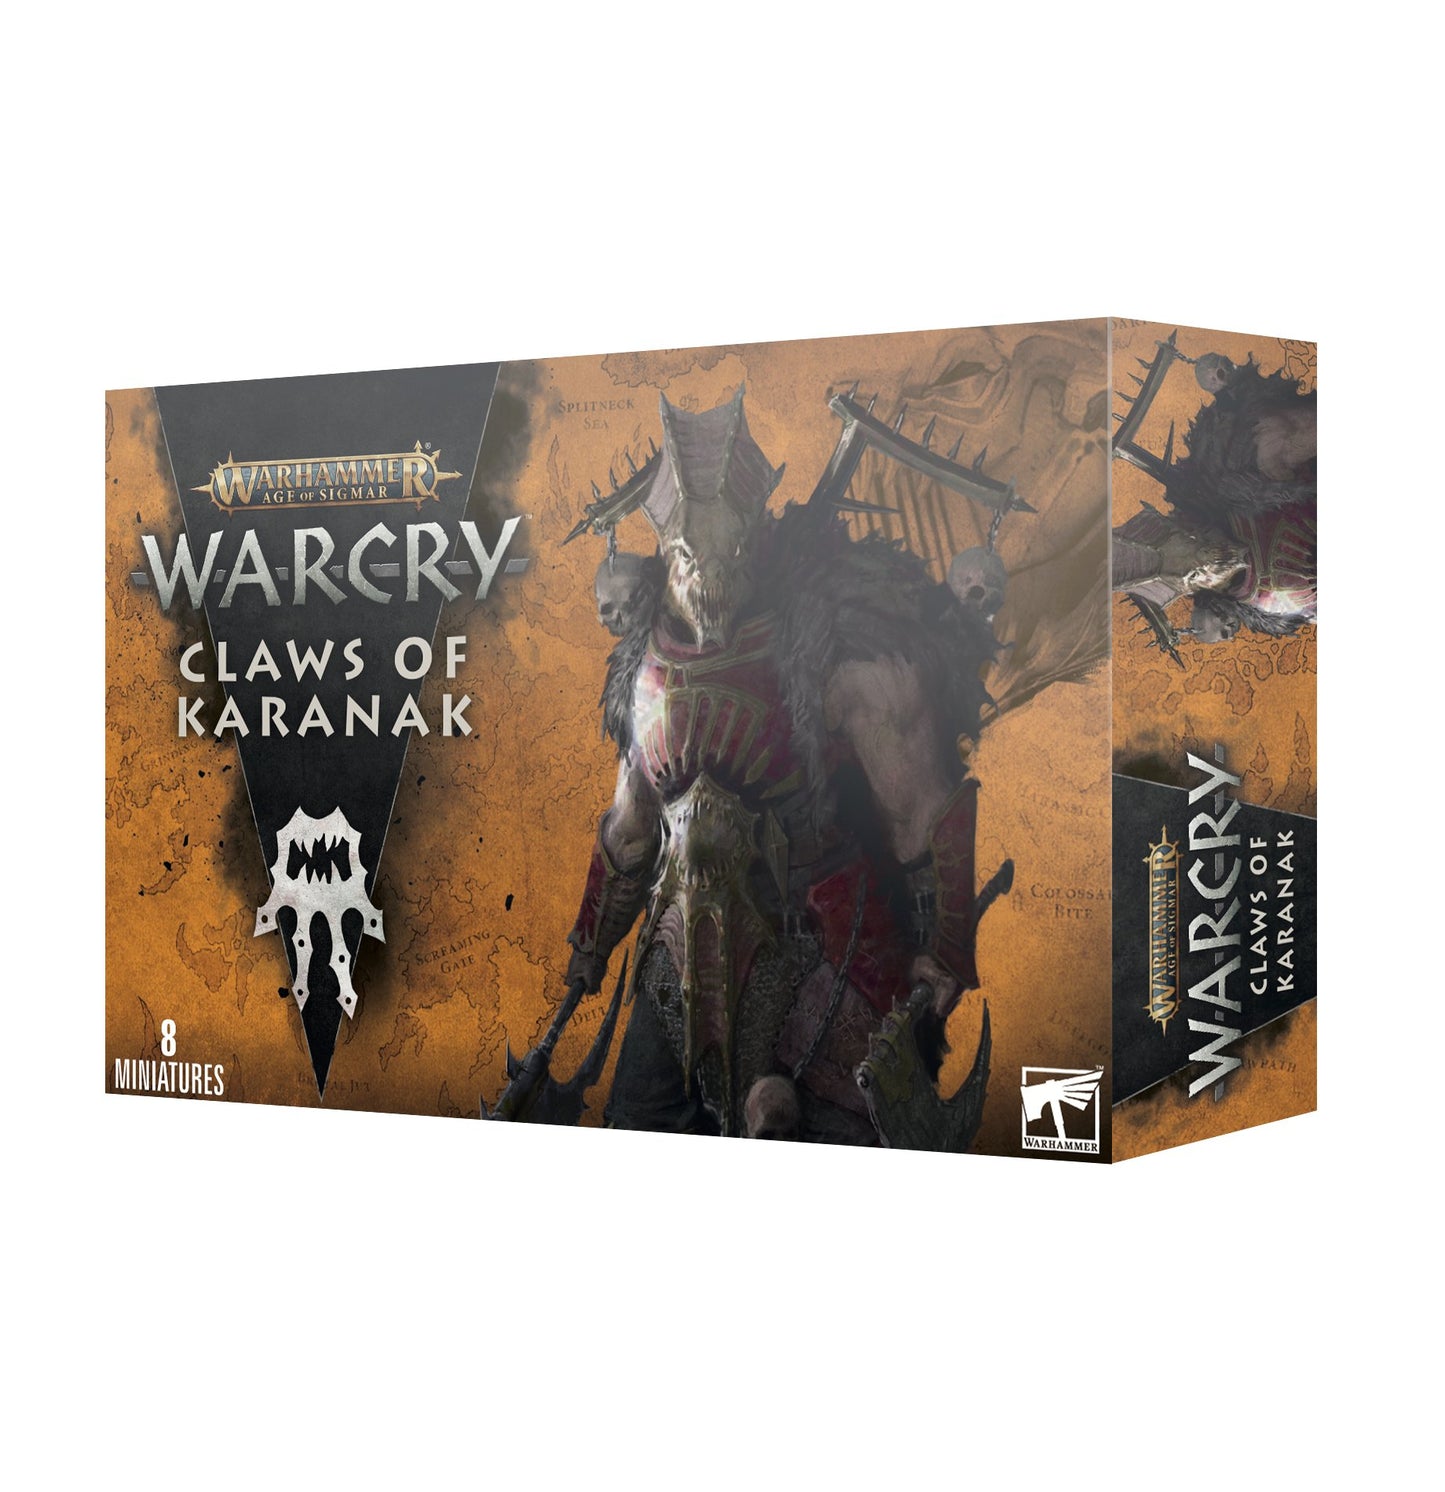 WarCry: Claws of Karanak